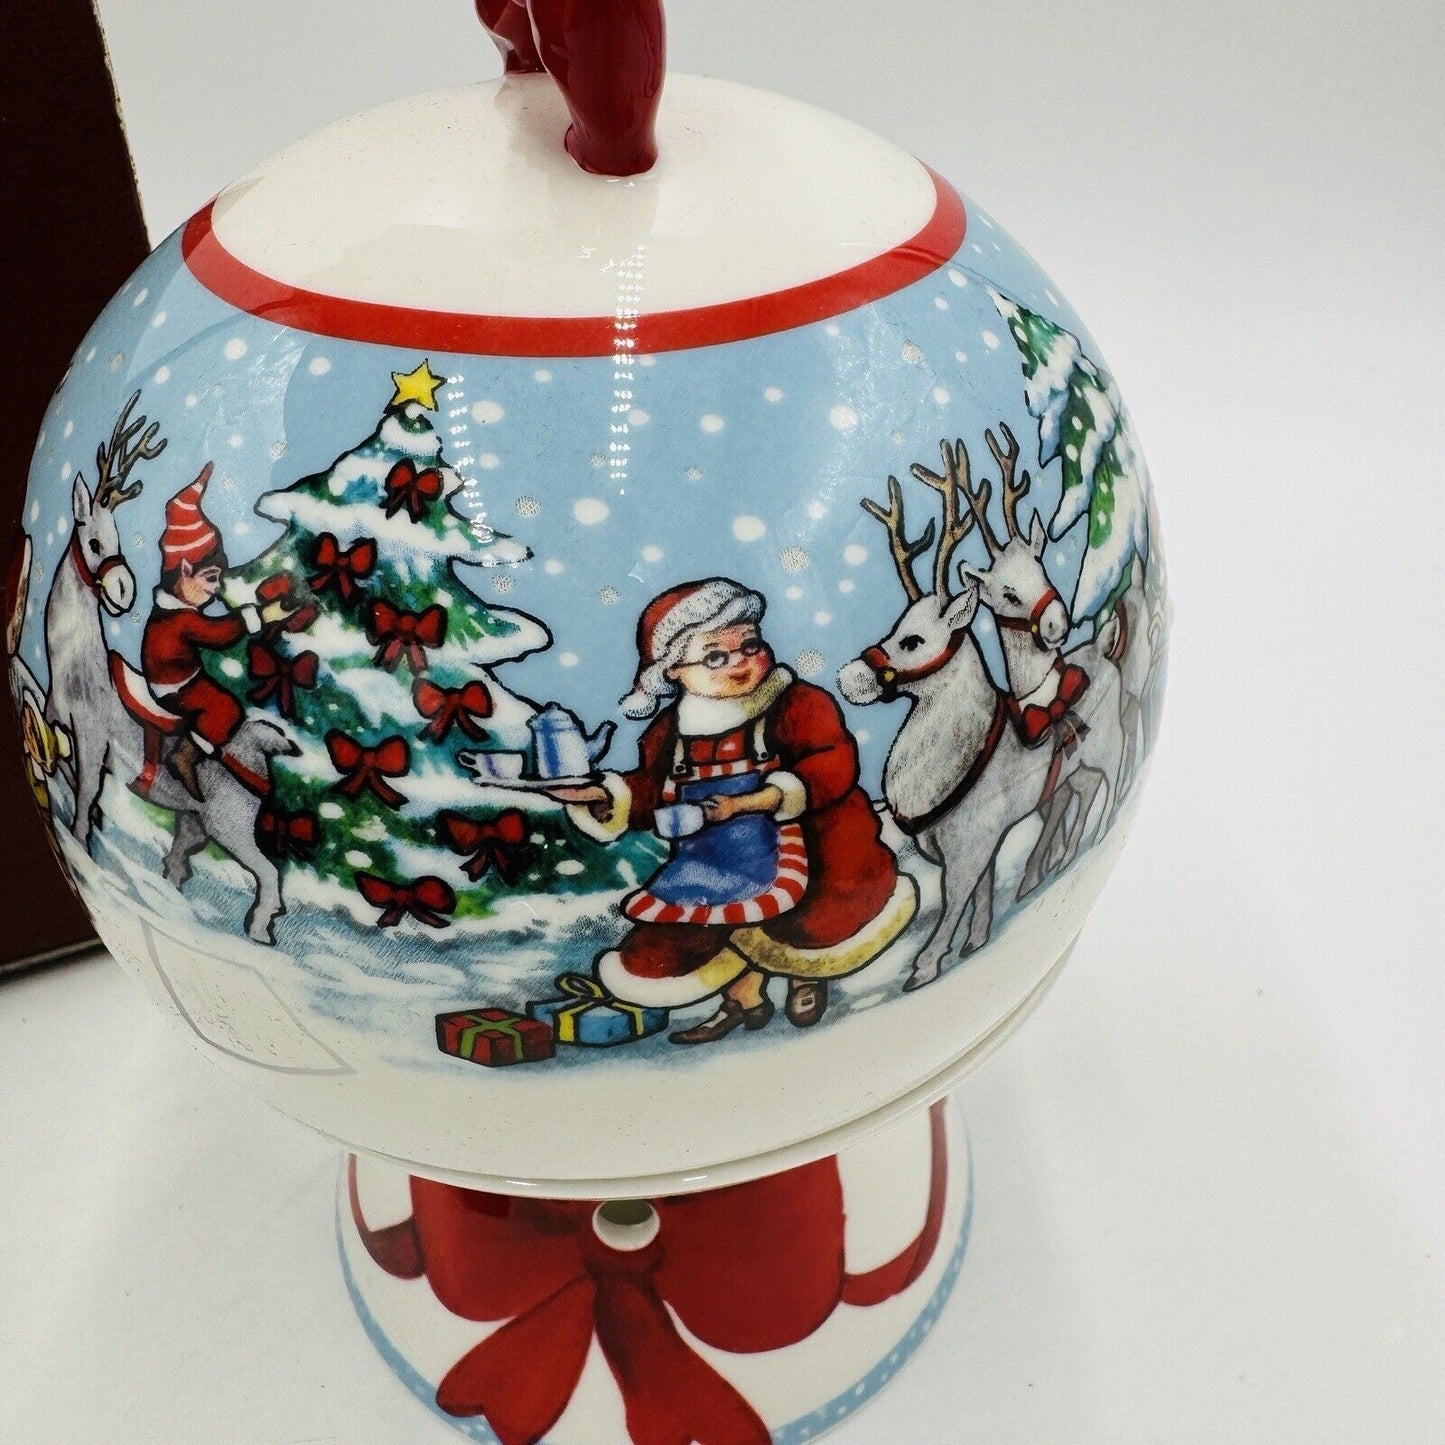 Villeroy and Boch Santa's Apple Baker Porcelain 3 Pieces Sleigh & Reindeer